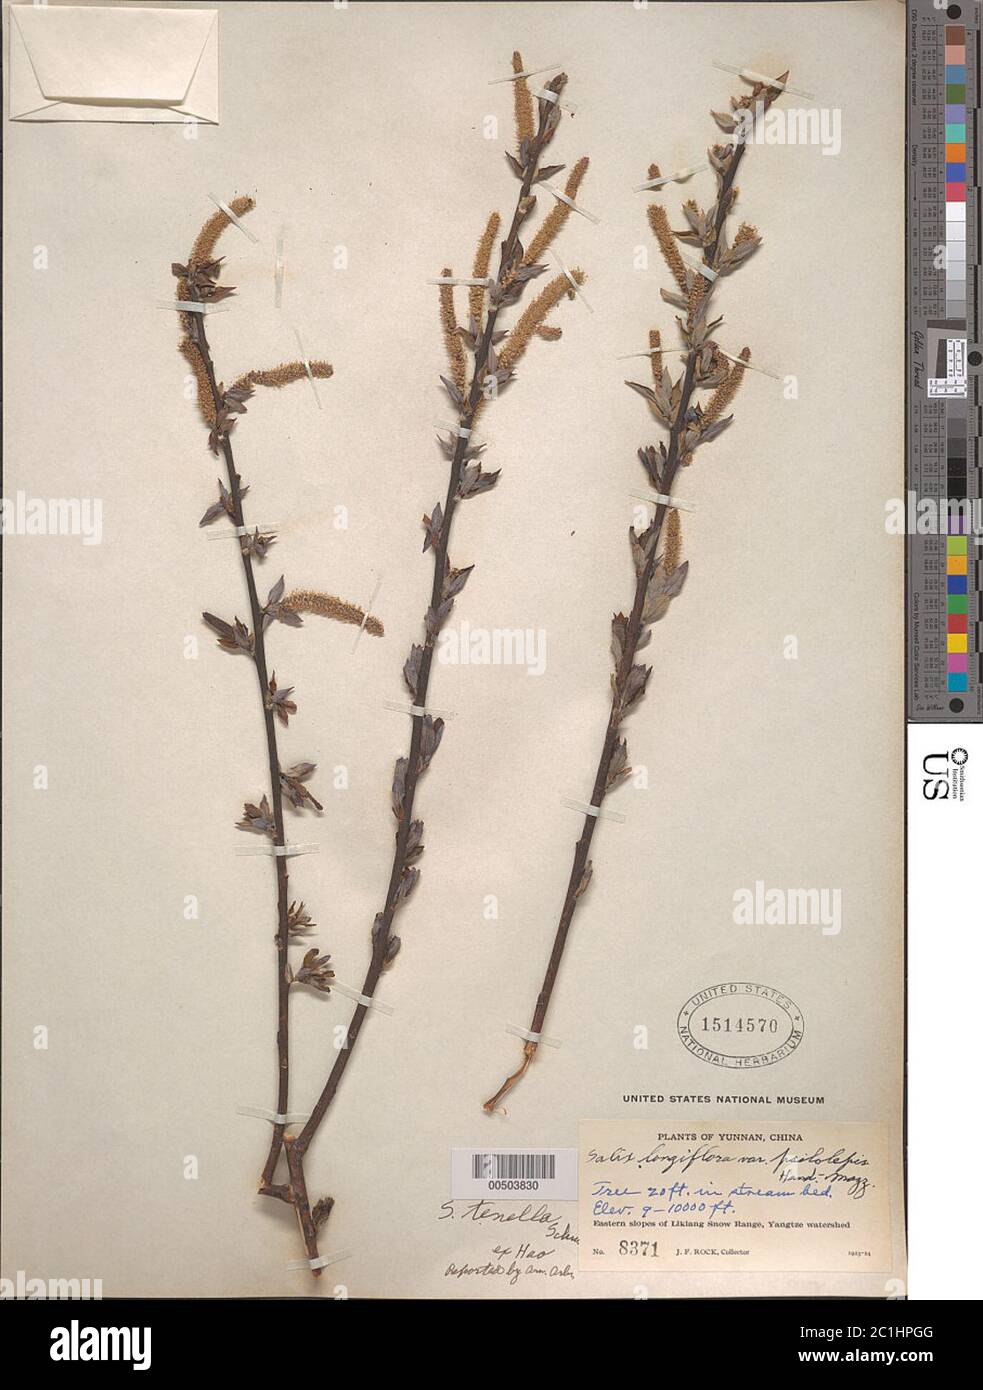 Salix longiflora var psilolepis HandMazz Salix longiflora var psilolepis HandMazz. Stock Photo